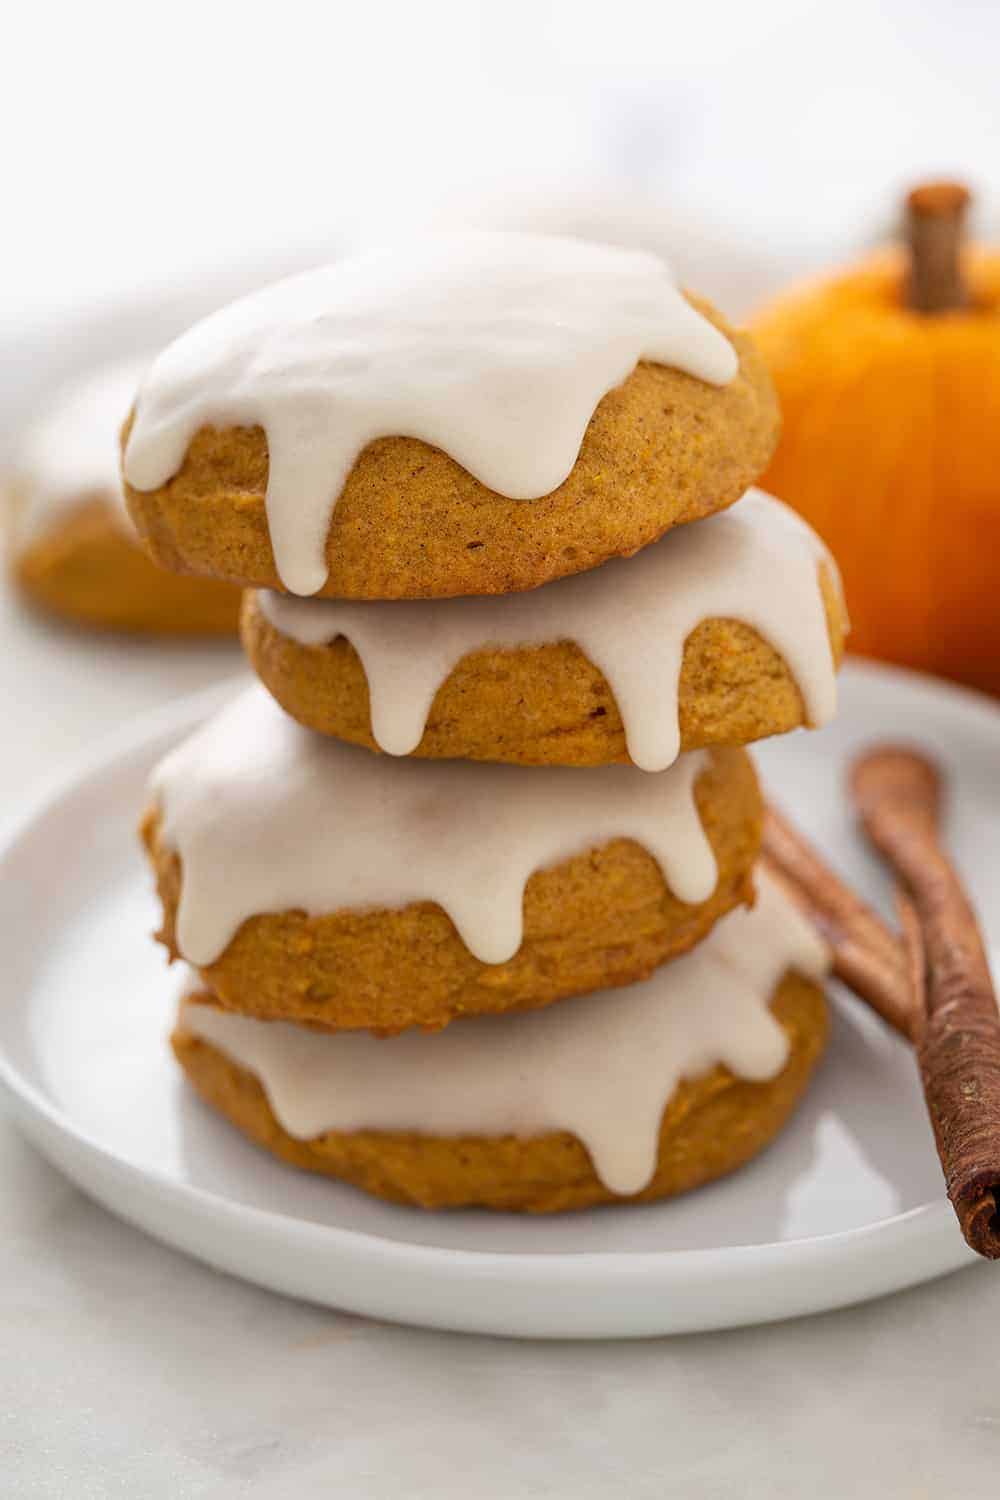 https://www.mybakingaddiction.com/wp-content/uploads/2012/11/stacked-pumpkin-cookies-on-plate.jpg